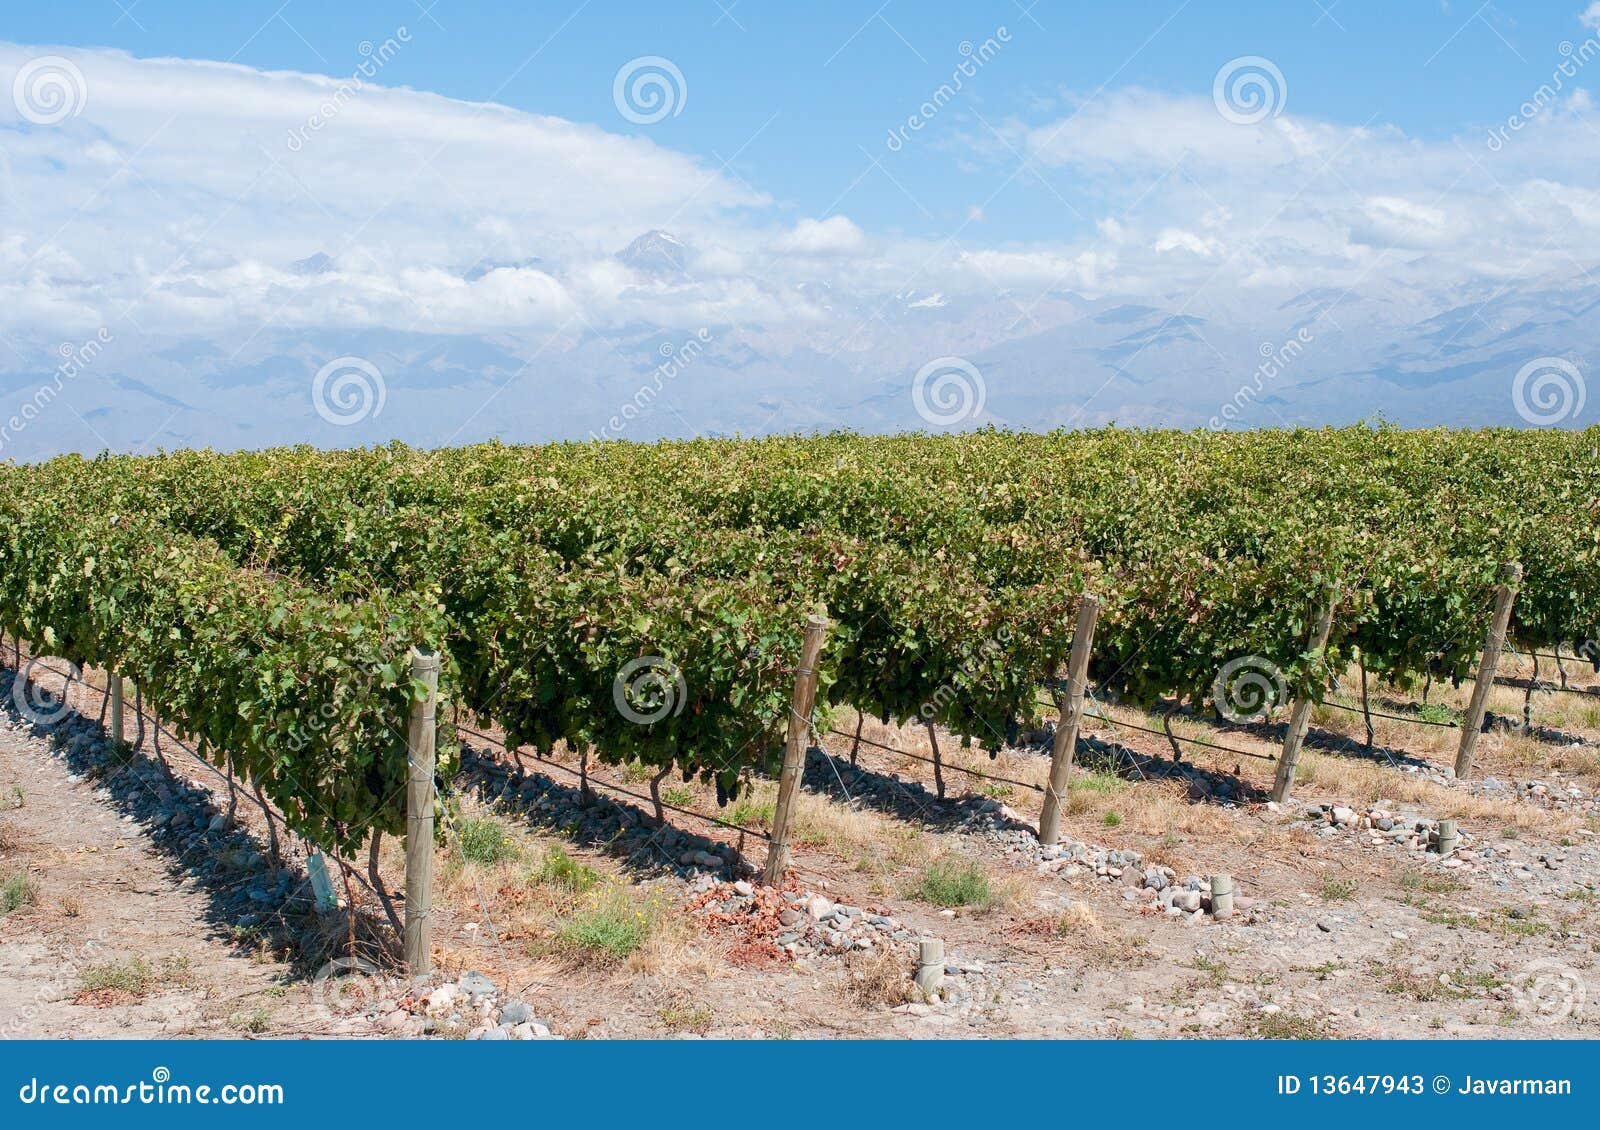 vineyards of mendoza, argentina